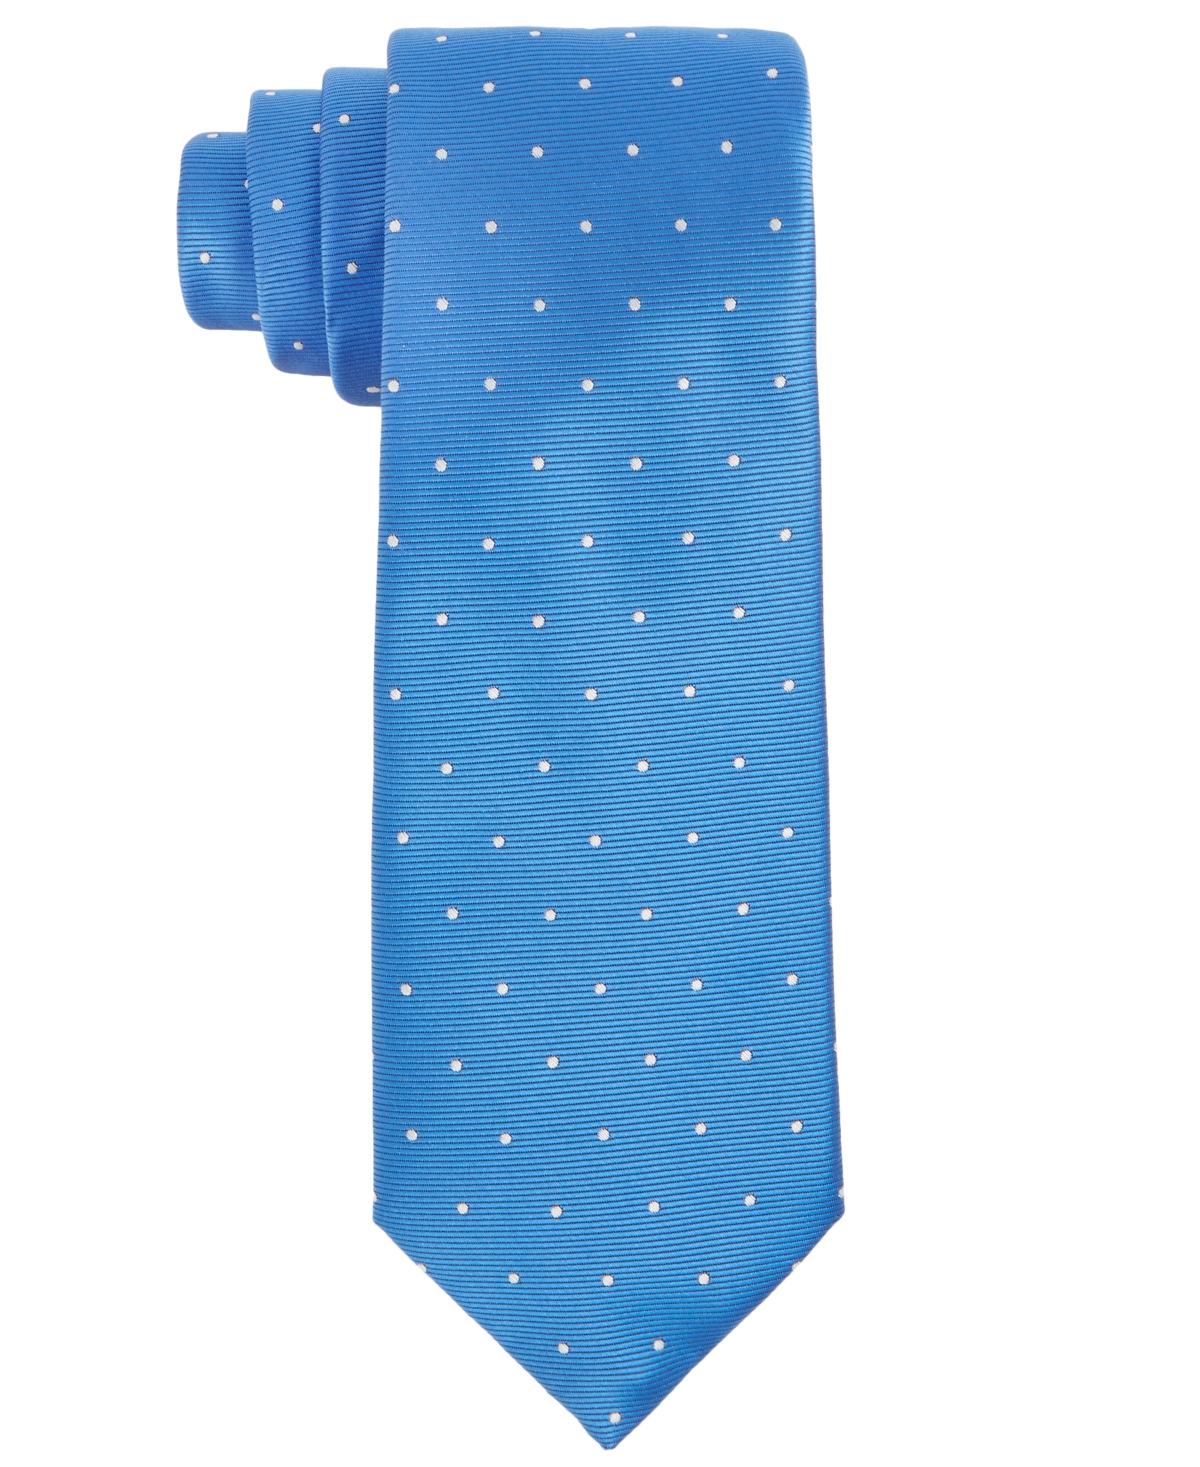 Shop Tayion Collection Men's Royal Blue & White Dot Tie